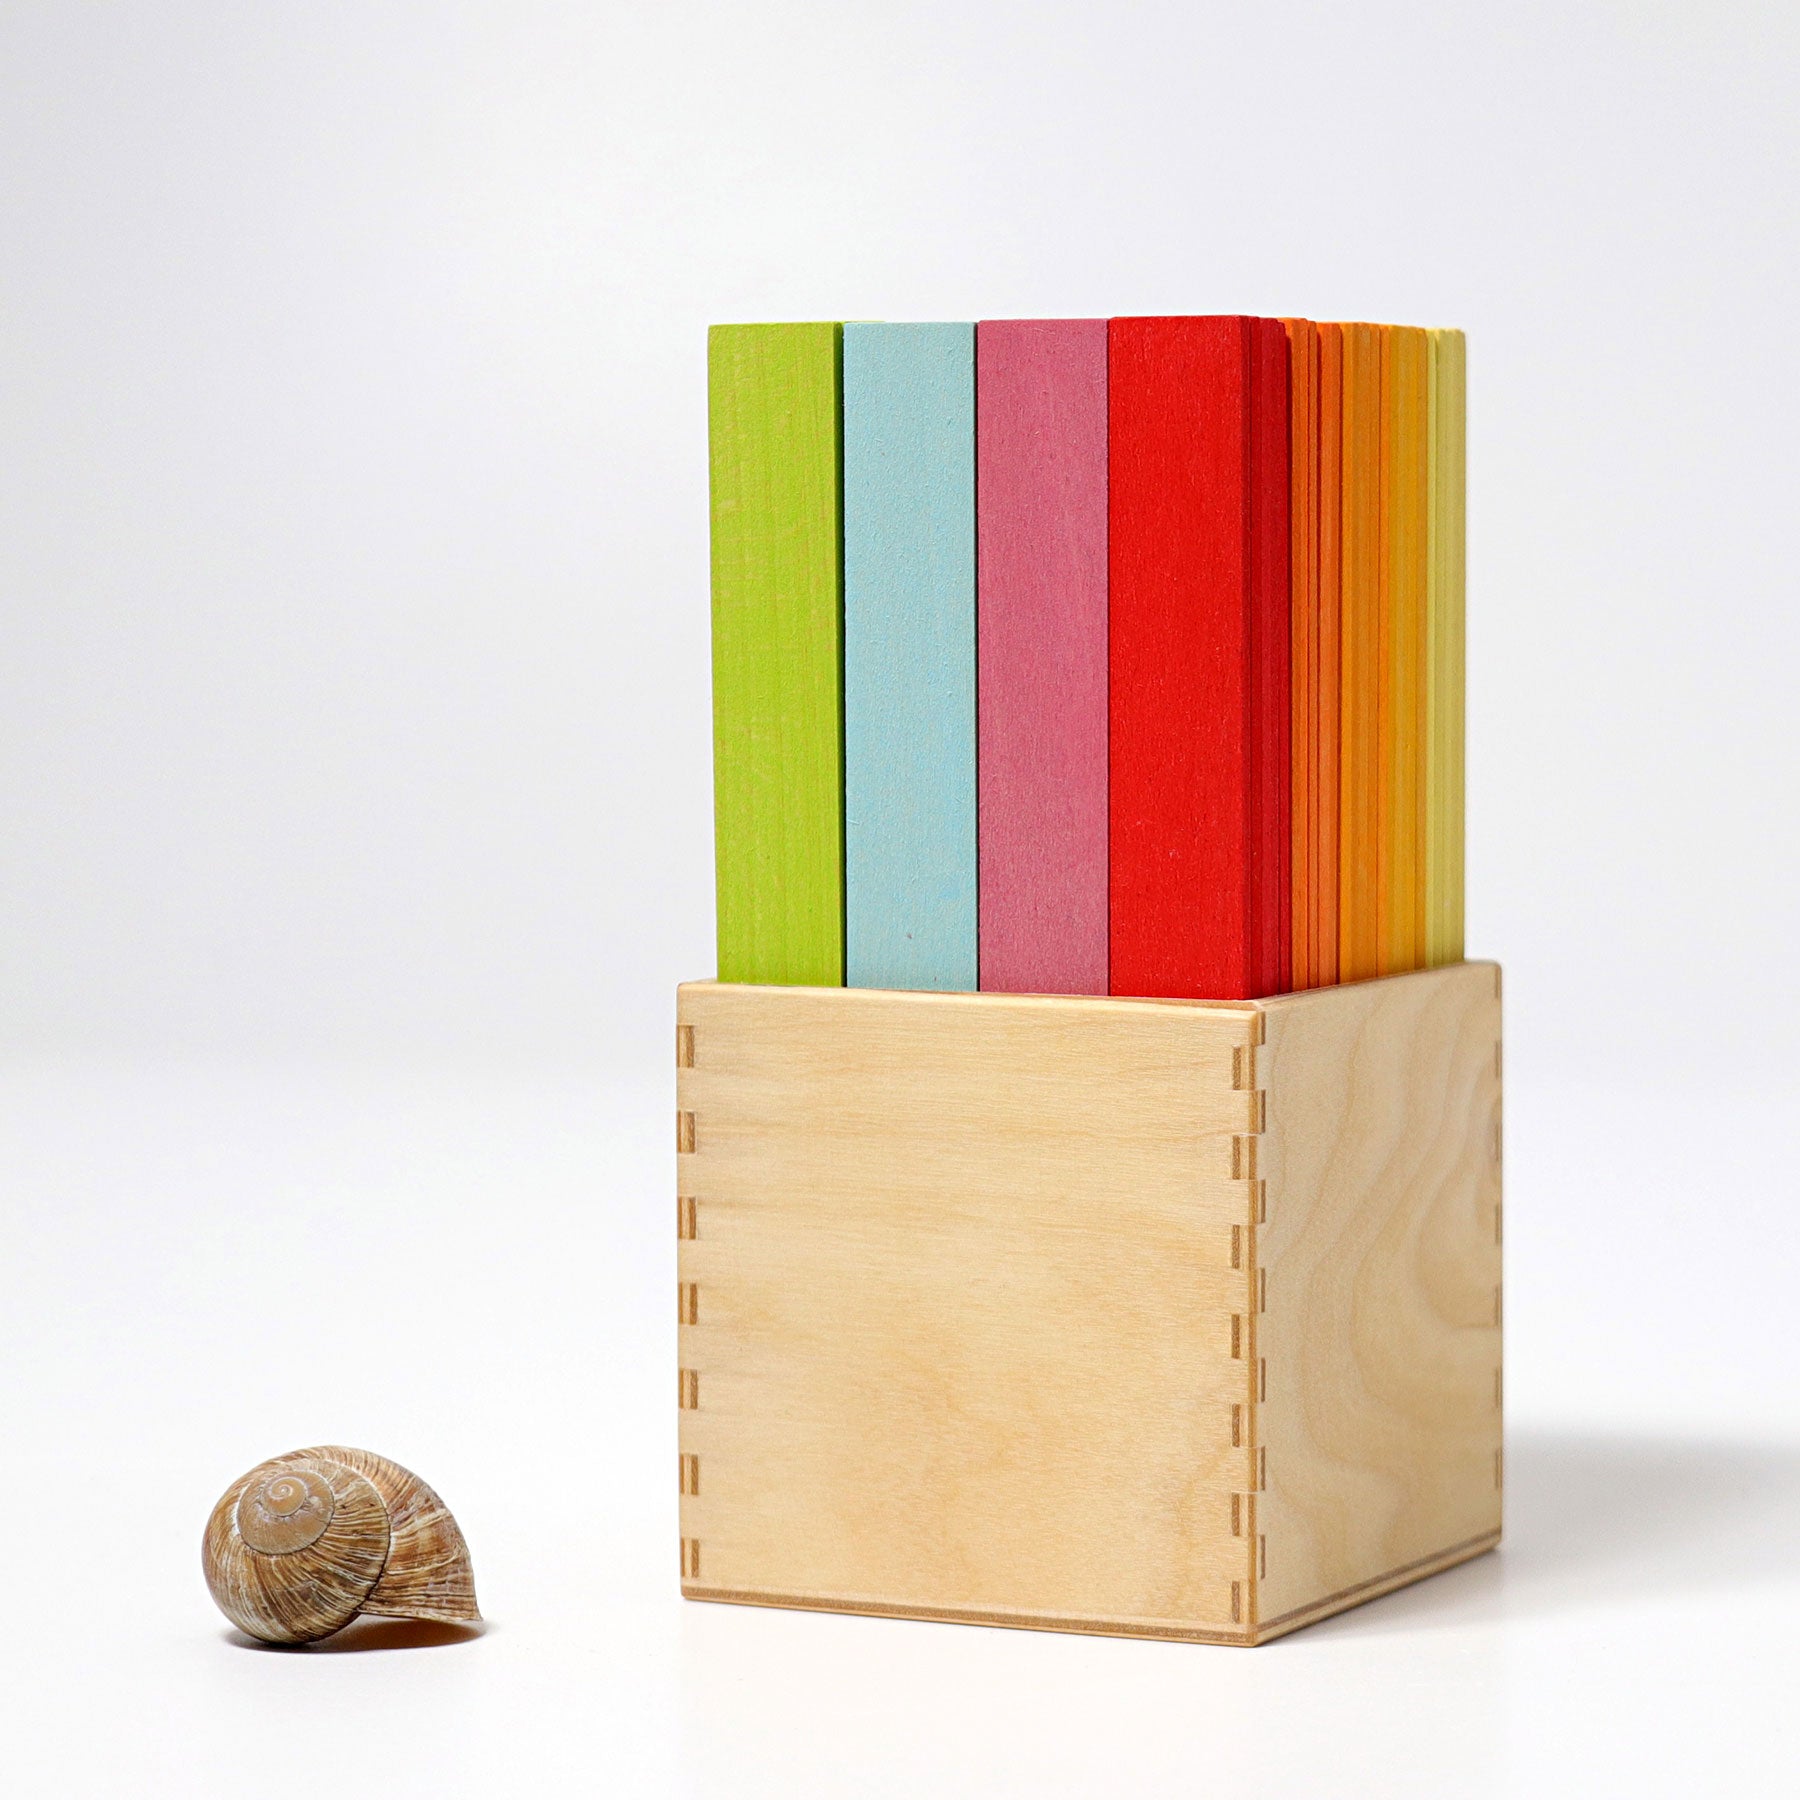 Grimms Leonardo Sticks Building Set | Wooden Block Sets | For ages 12+ months | Children of the Wild